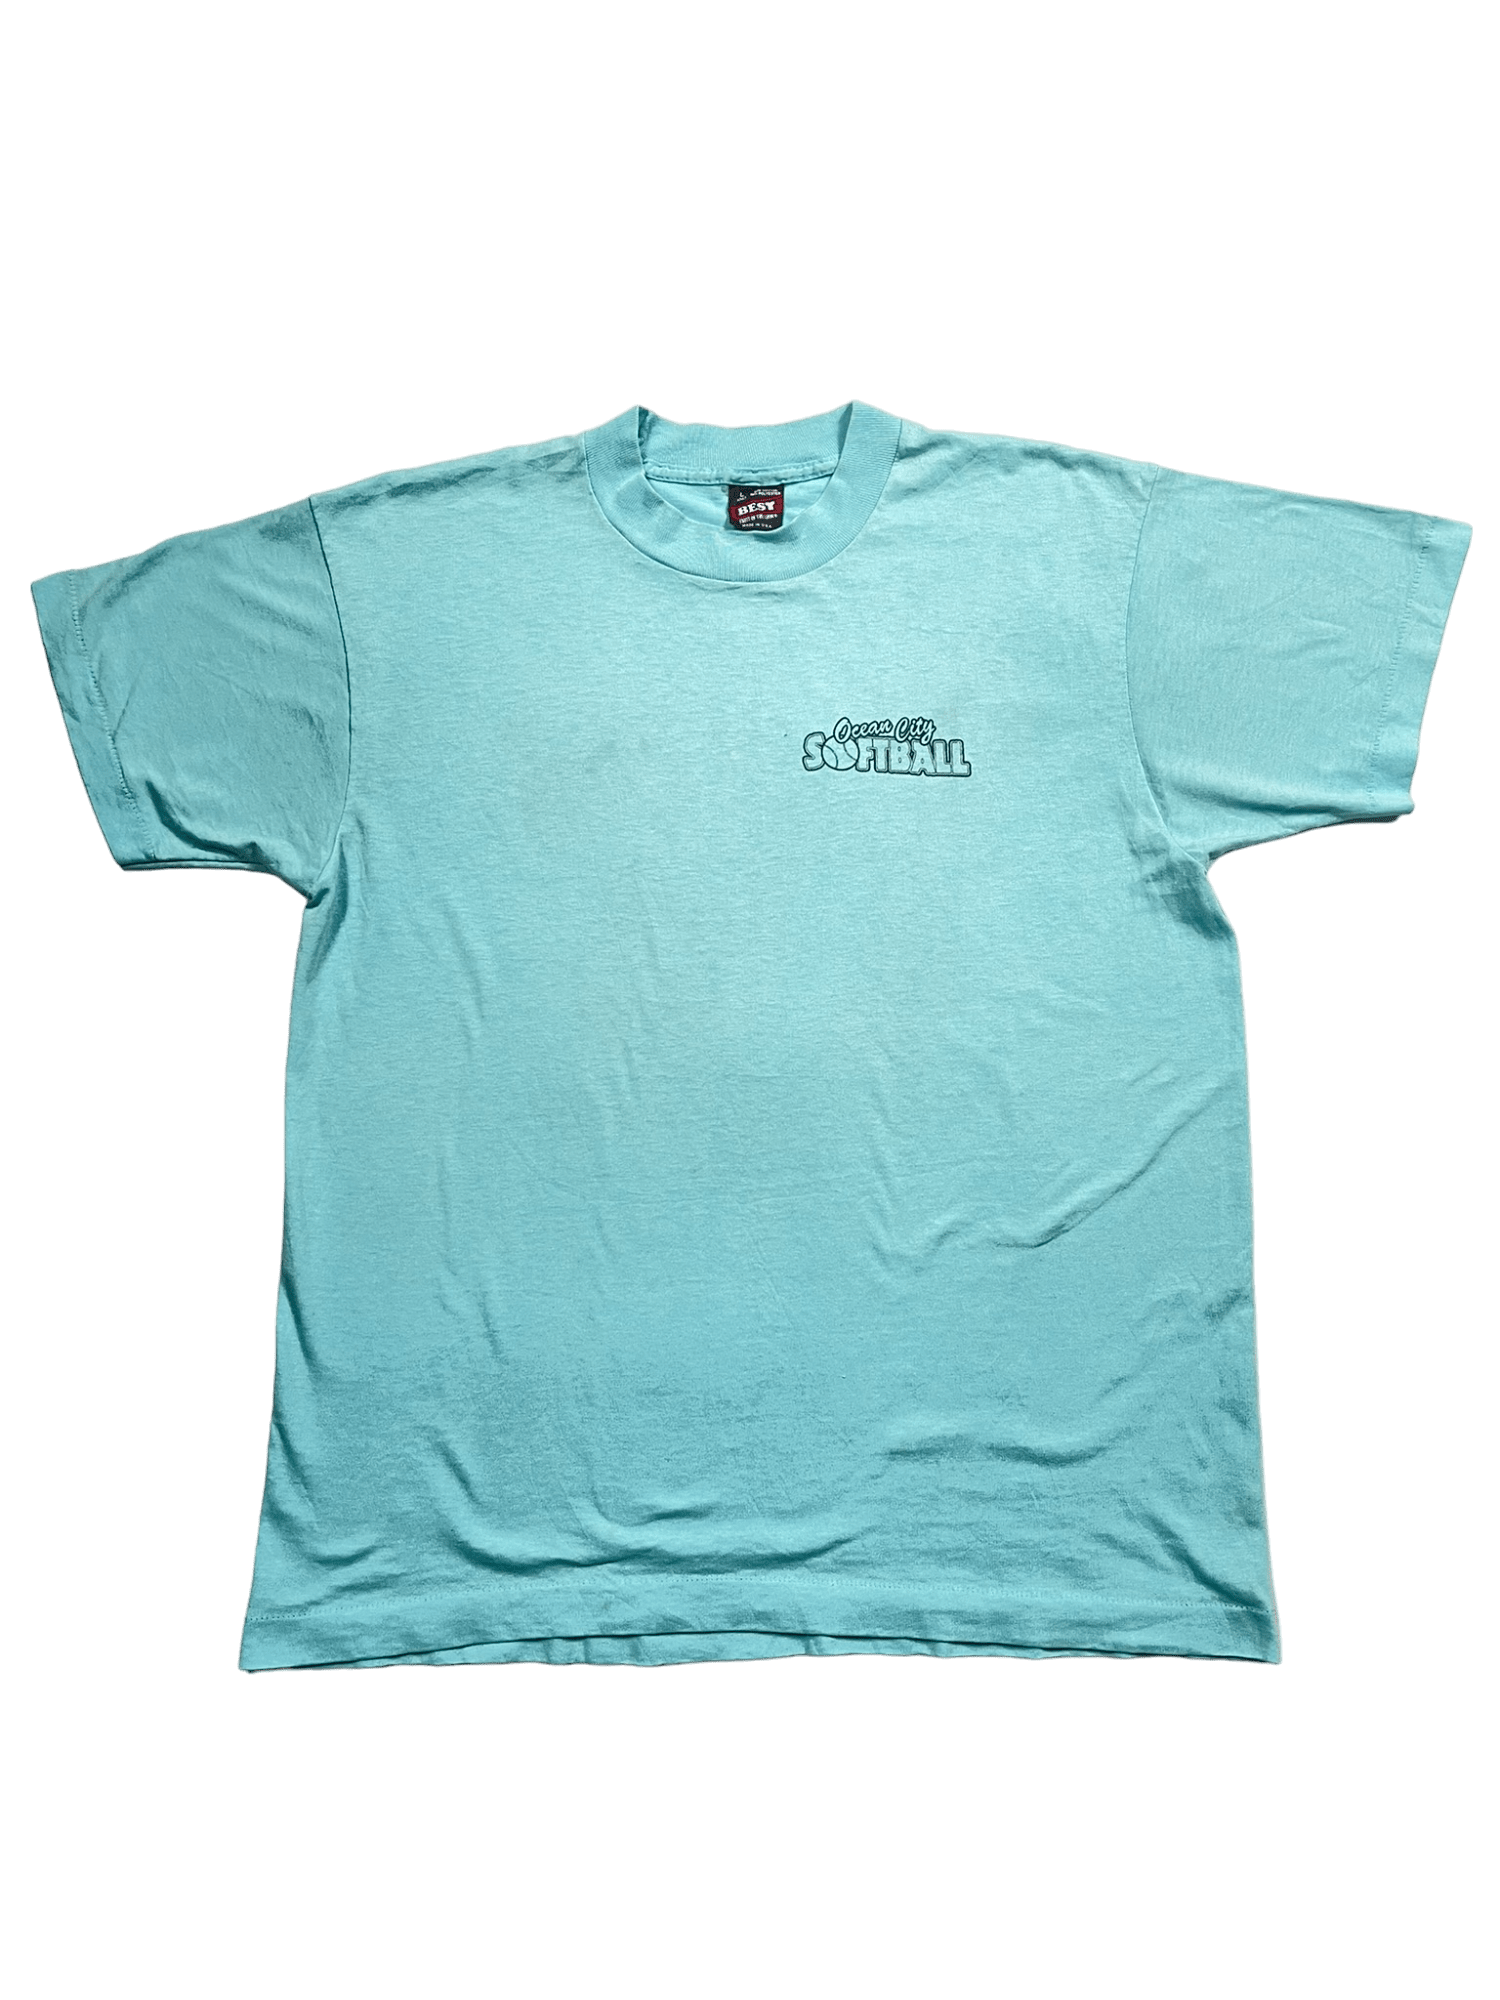 The Vintage Racks T-Shirt Ocean City Softball - L